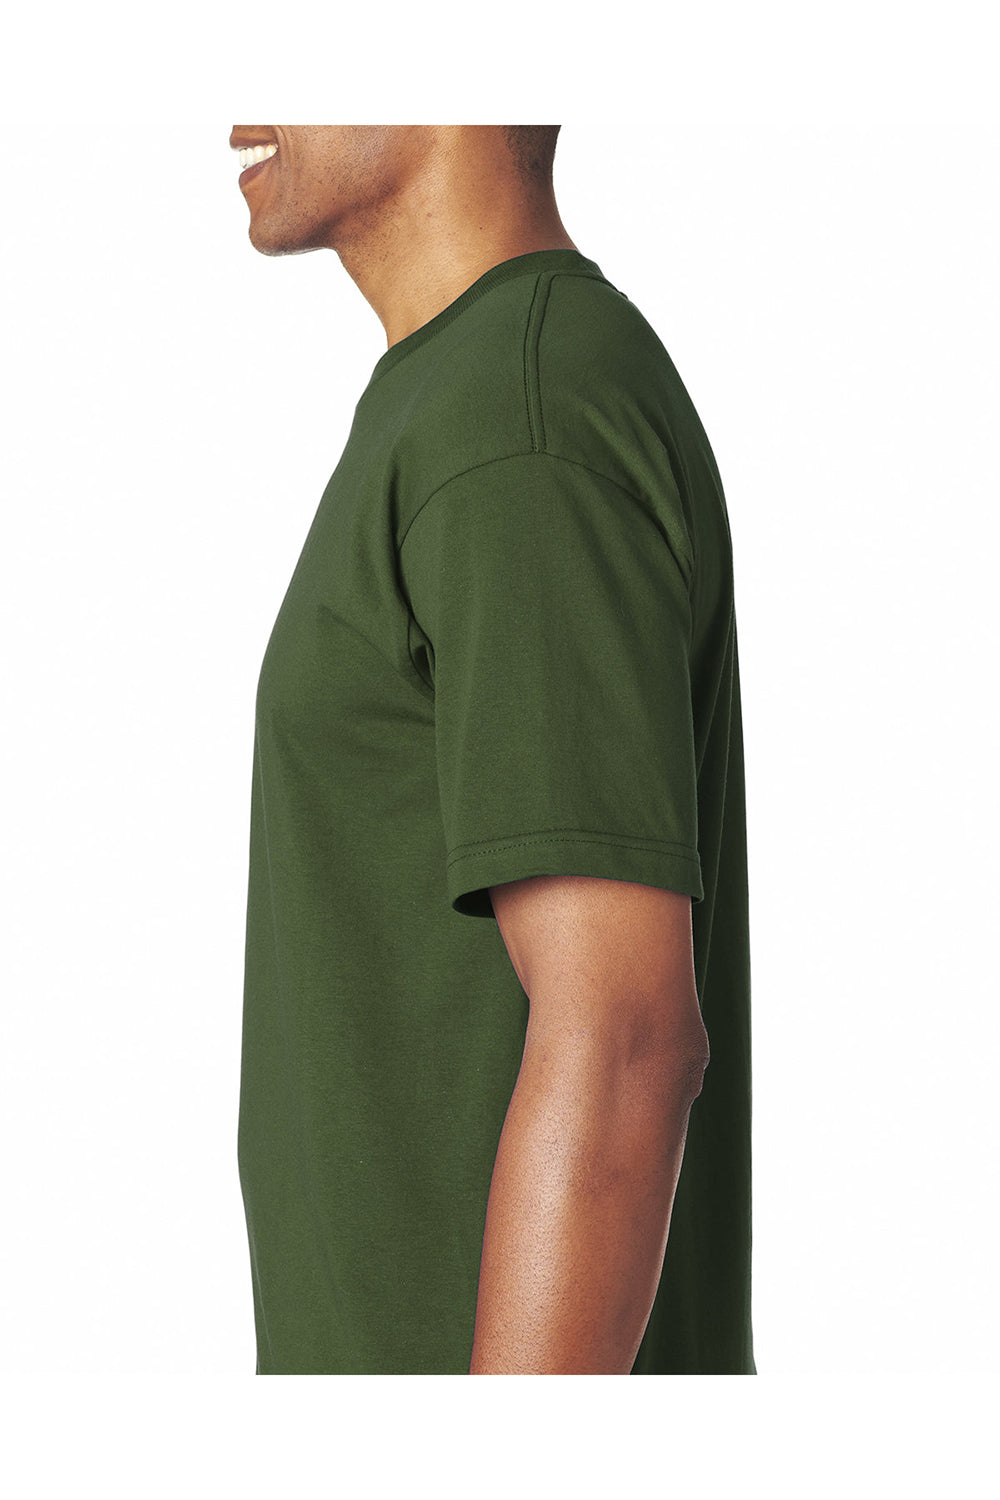 Bayside BA5100 Mens USA Made Short Sleeve Crewneck T-Shirt Forest Green Model Side